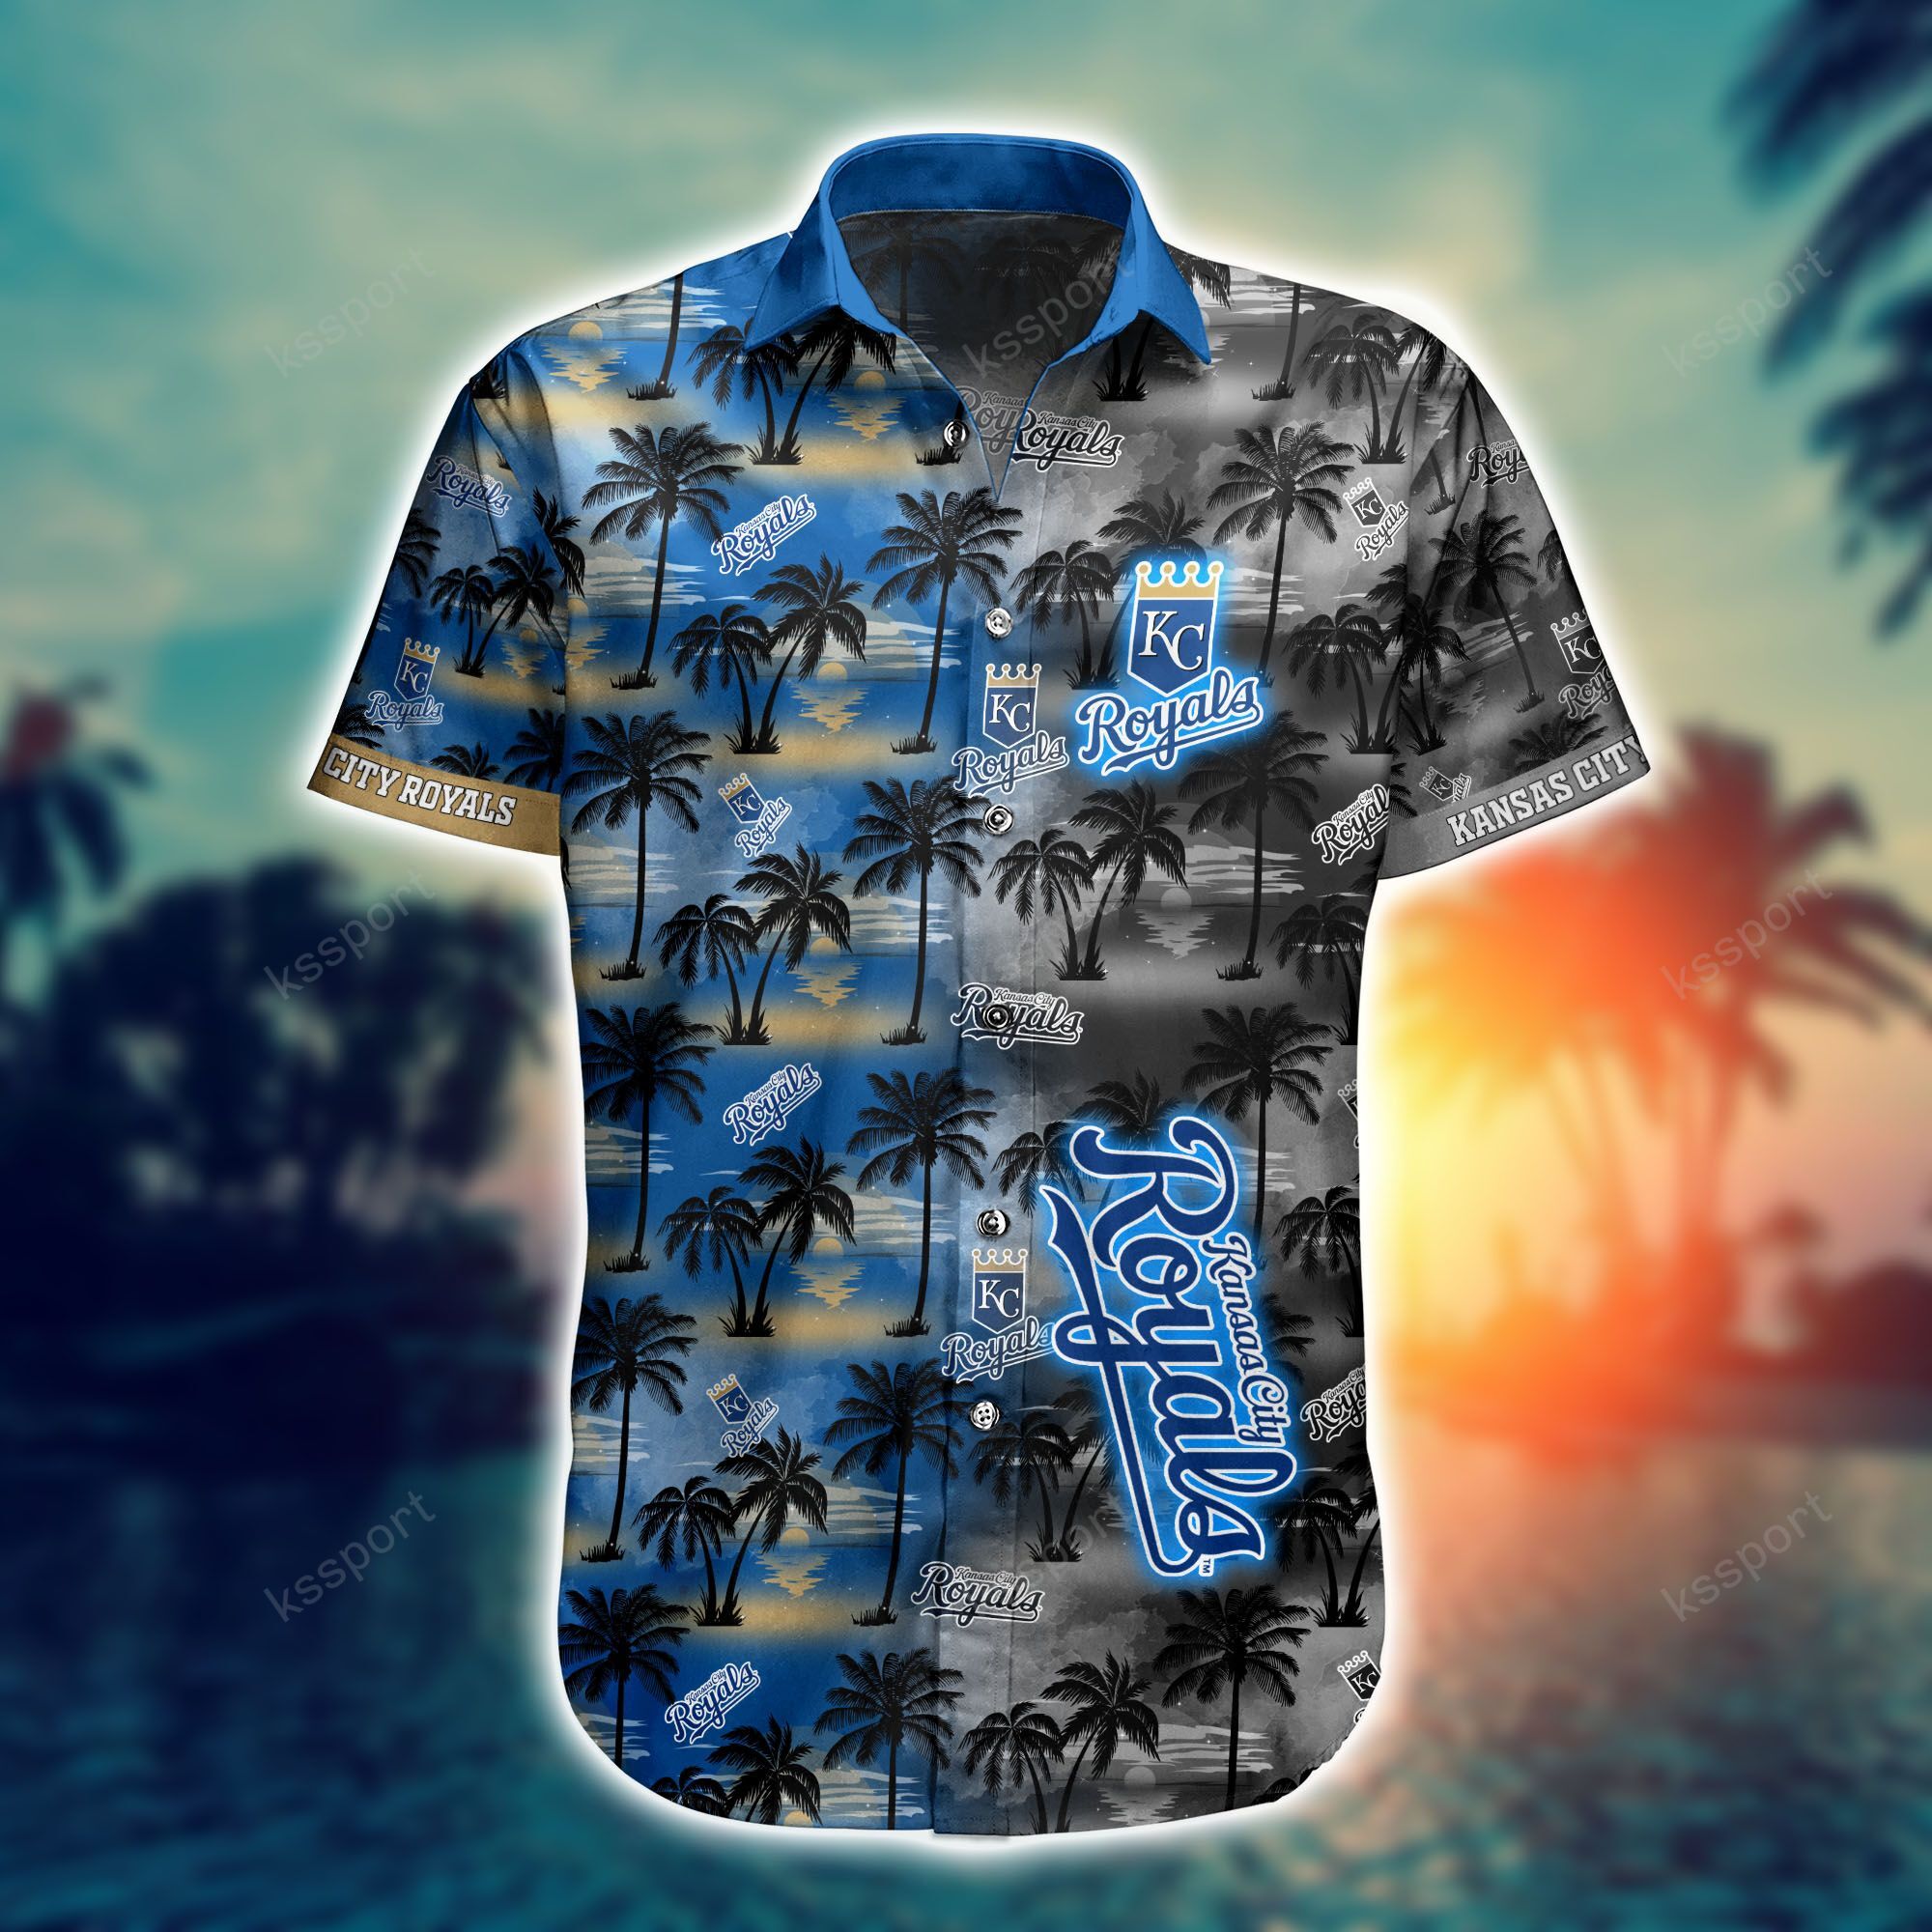 Hawaiian shirt and shorts is a great way to look stylish at a beach party 147